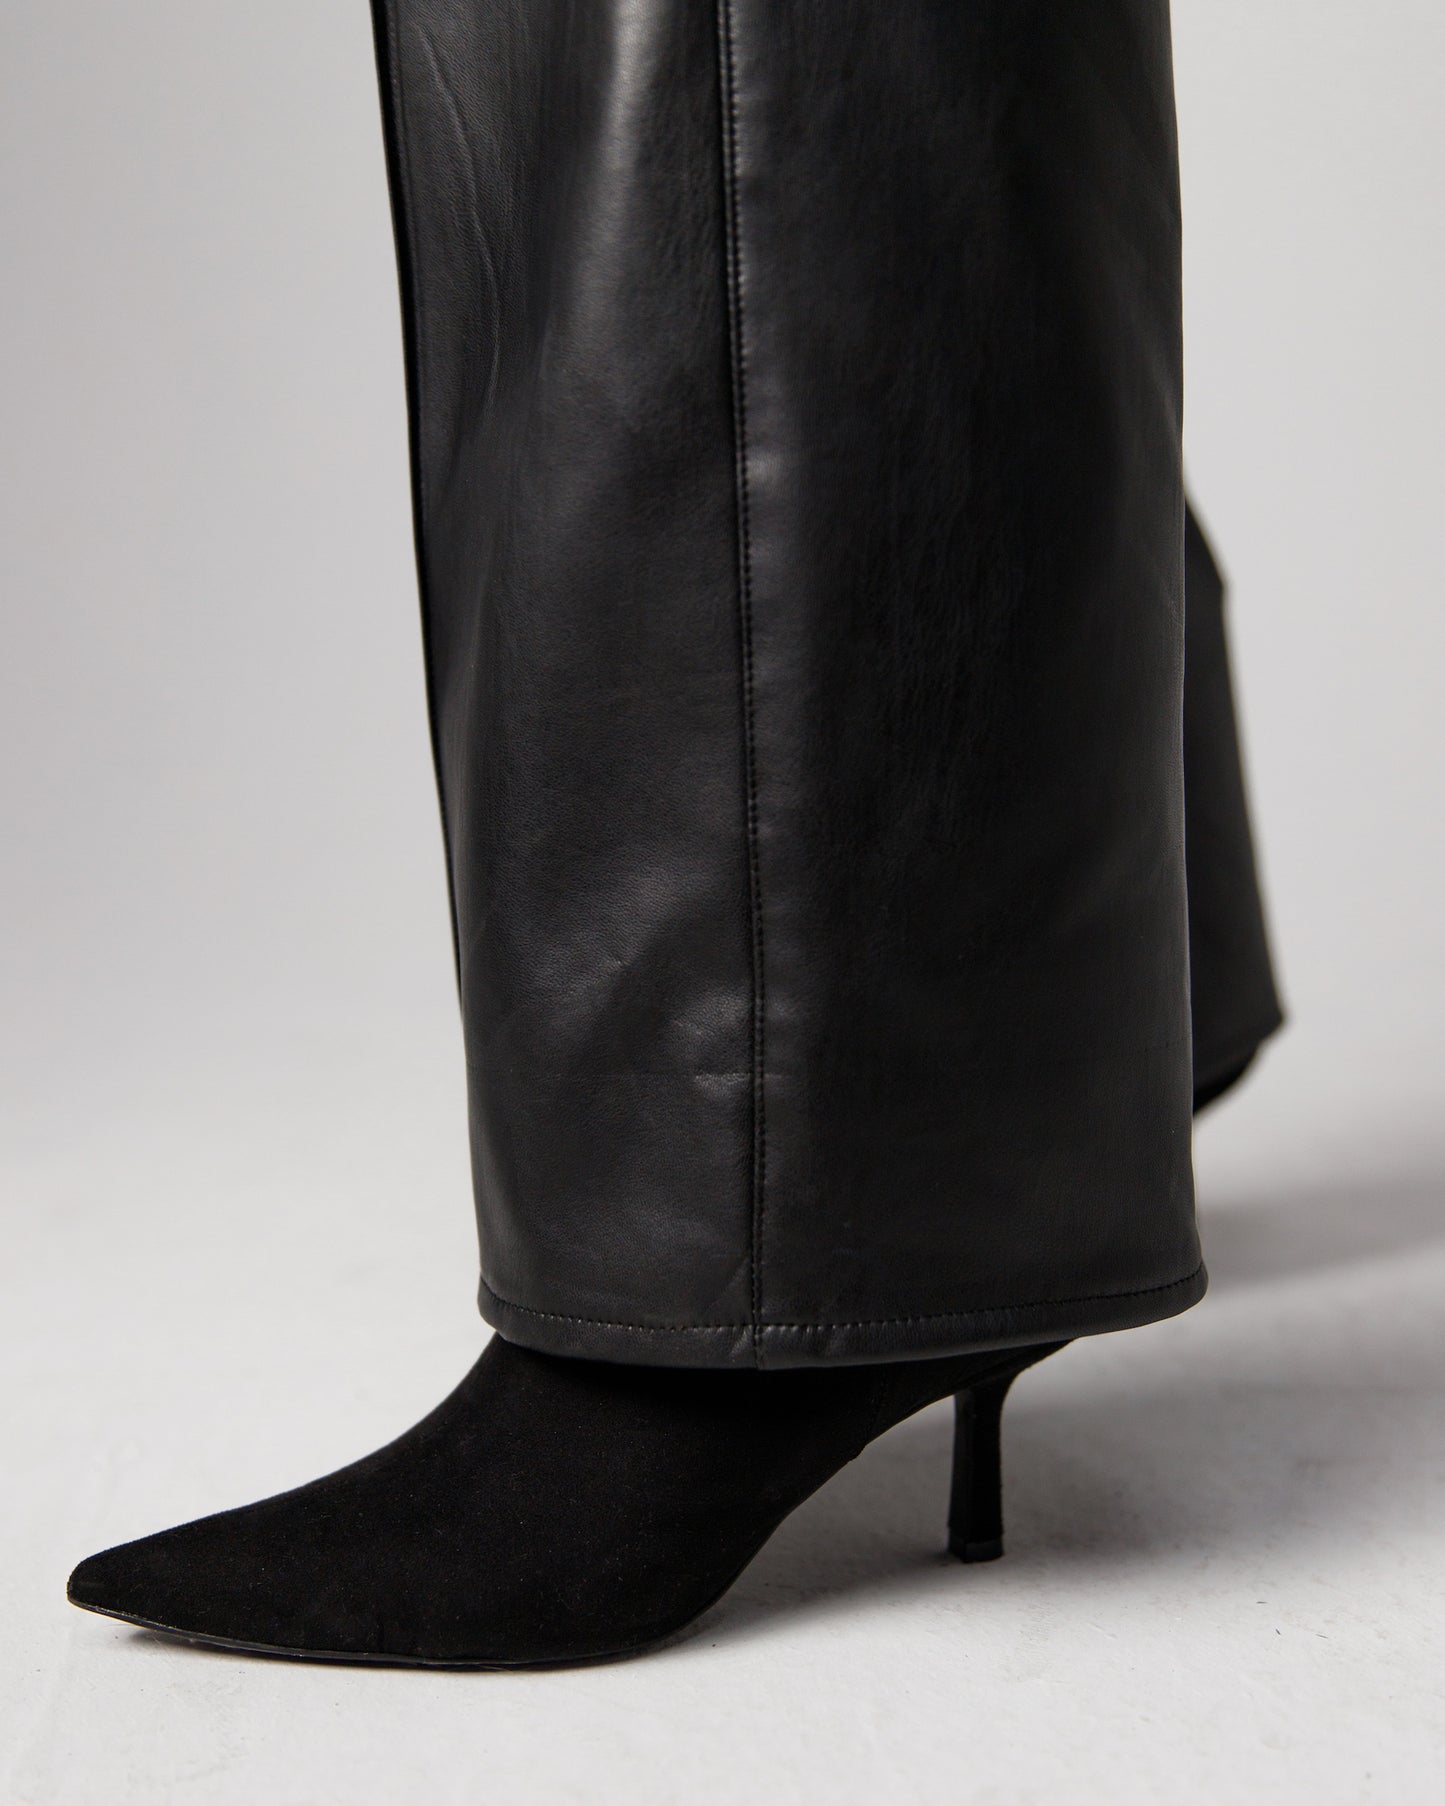 Soft vegan leather pants in black